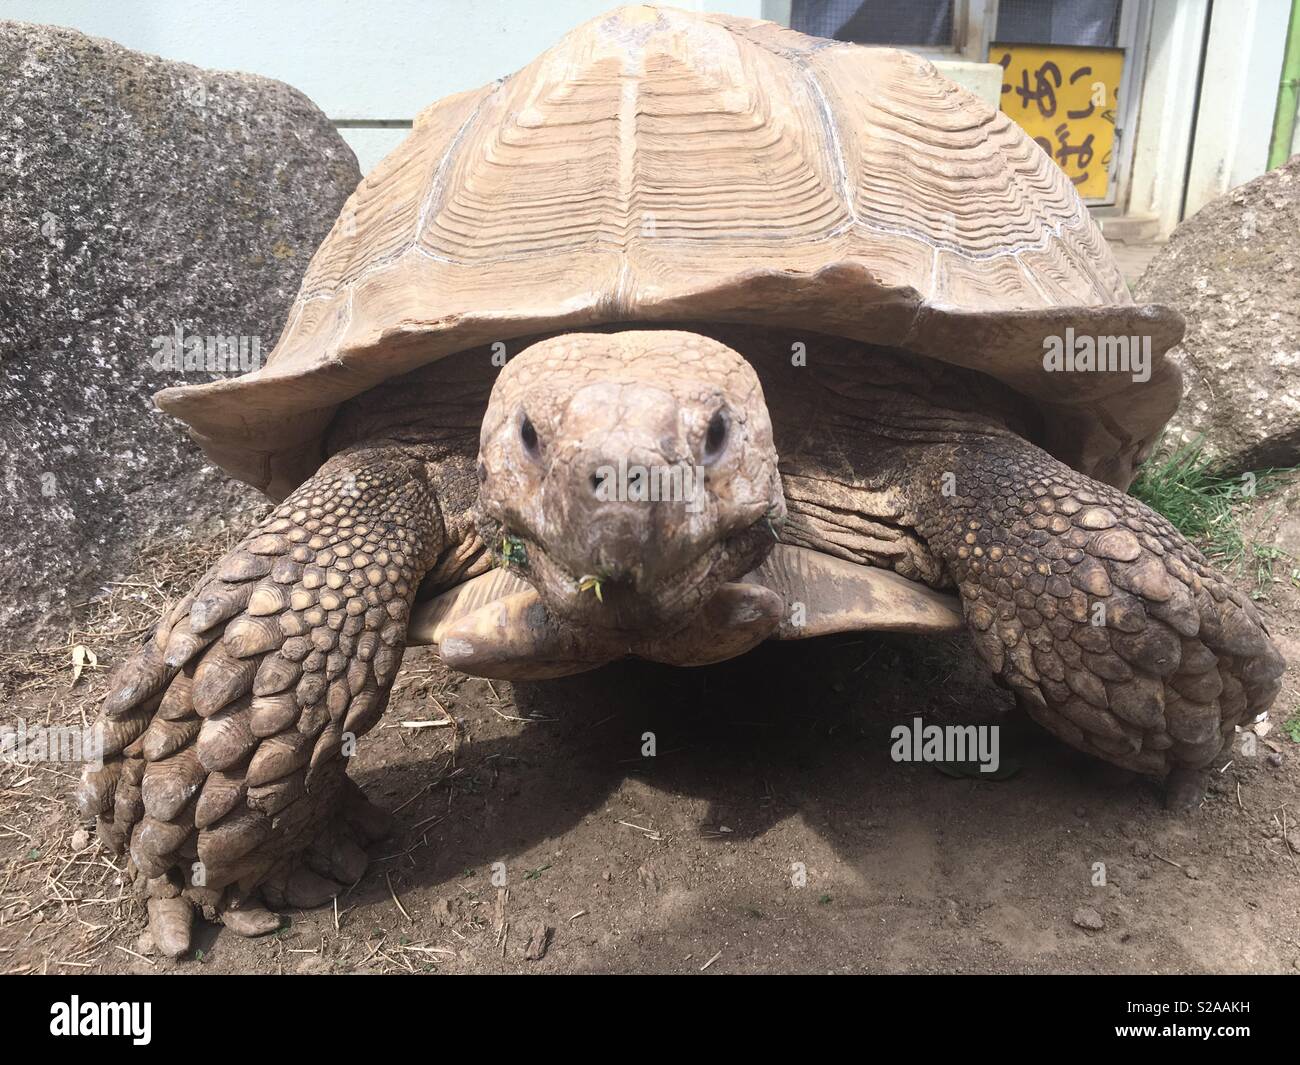 Giant tortoise up close Stock Photo